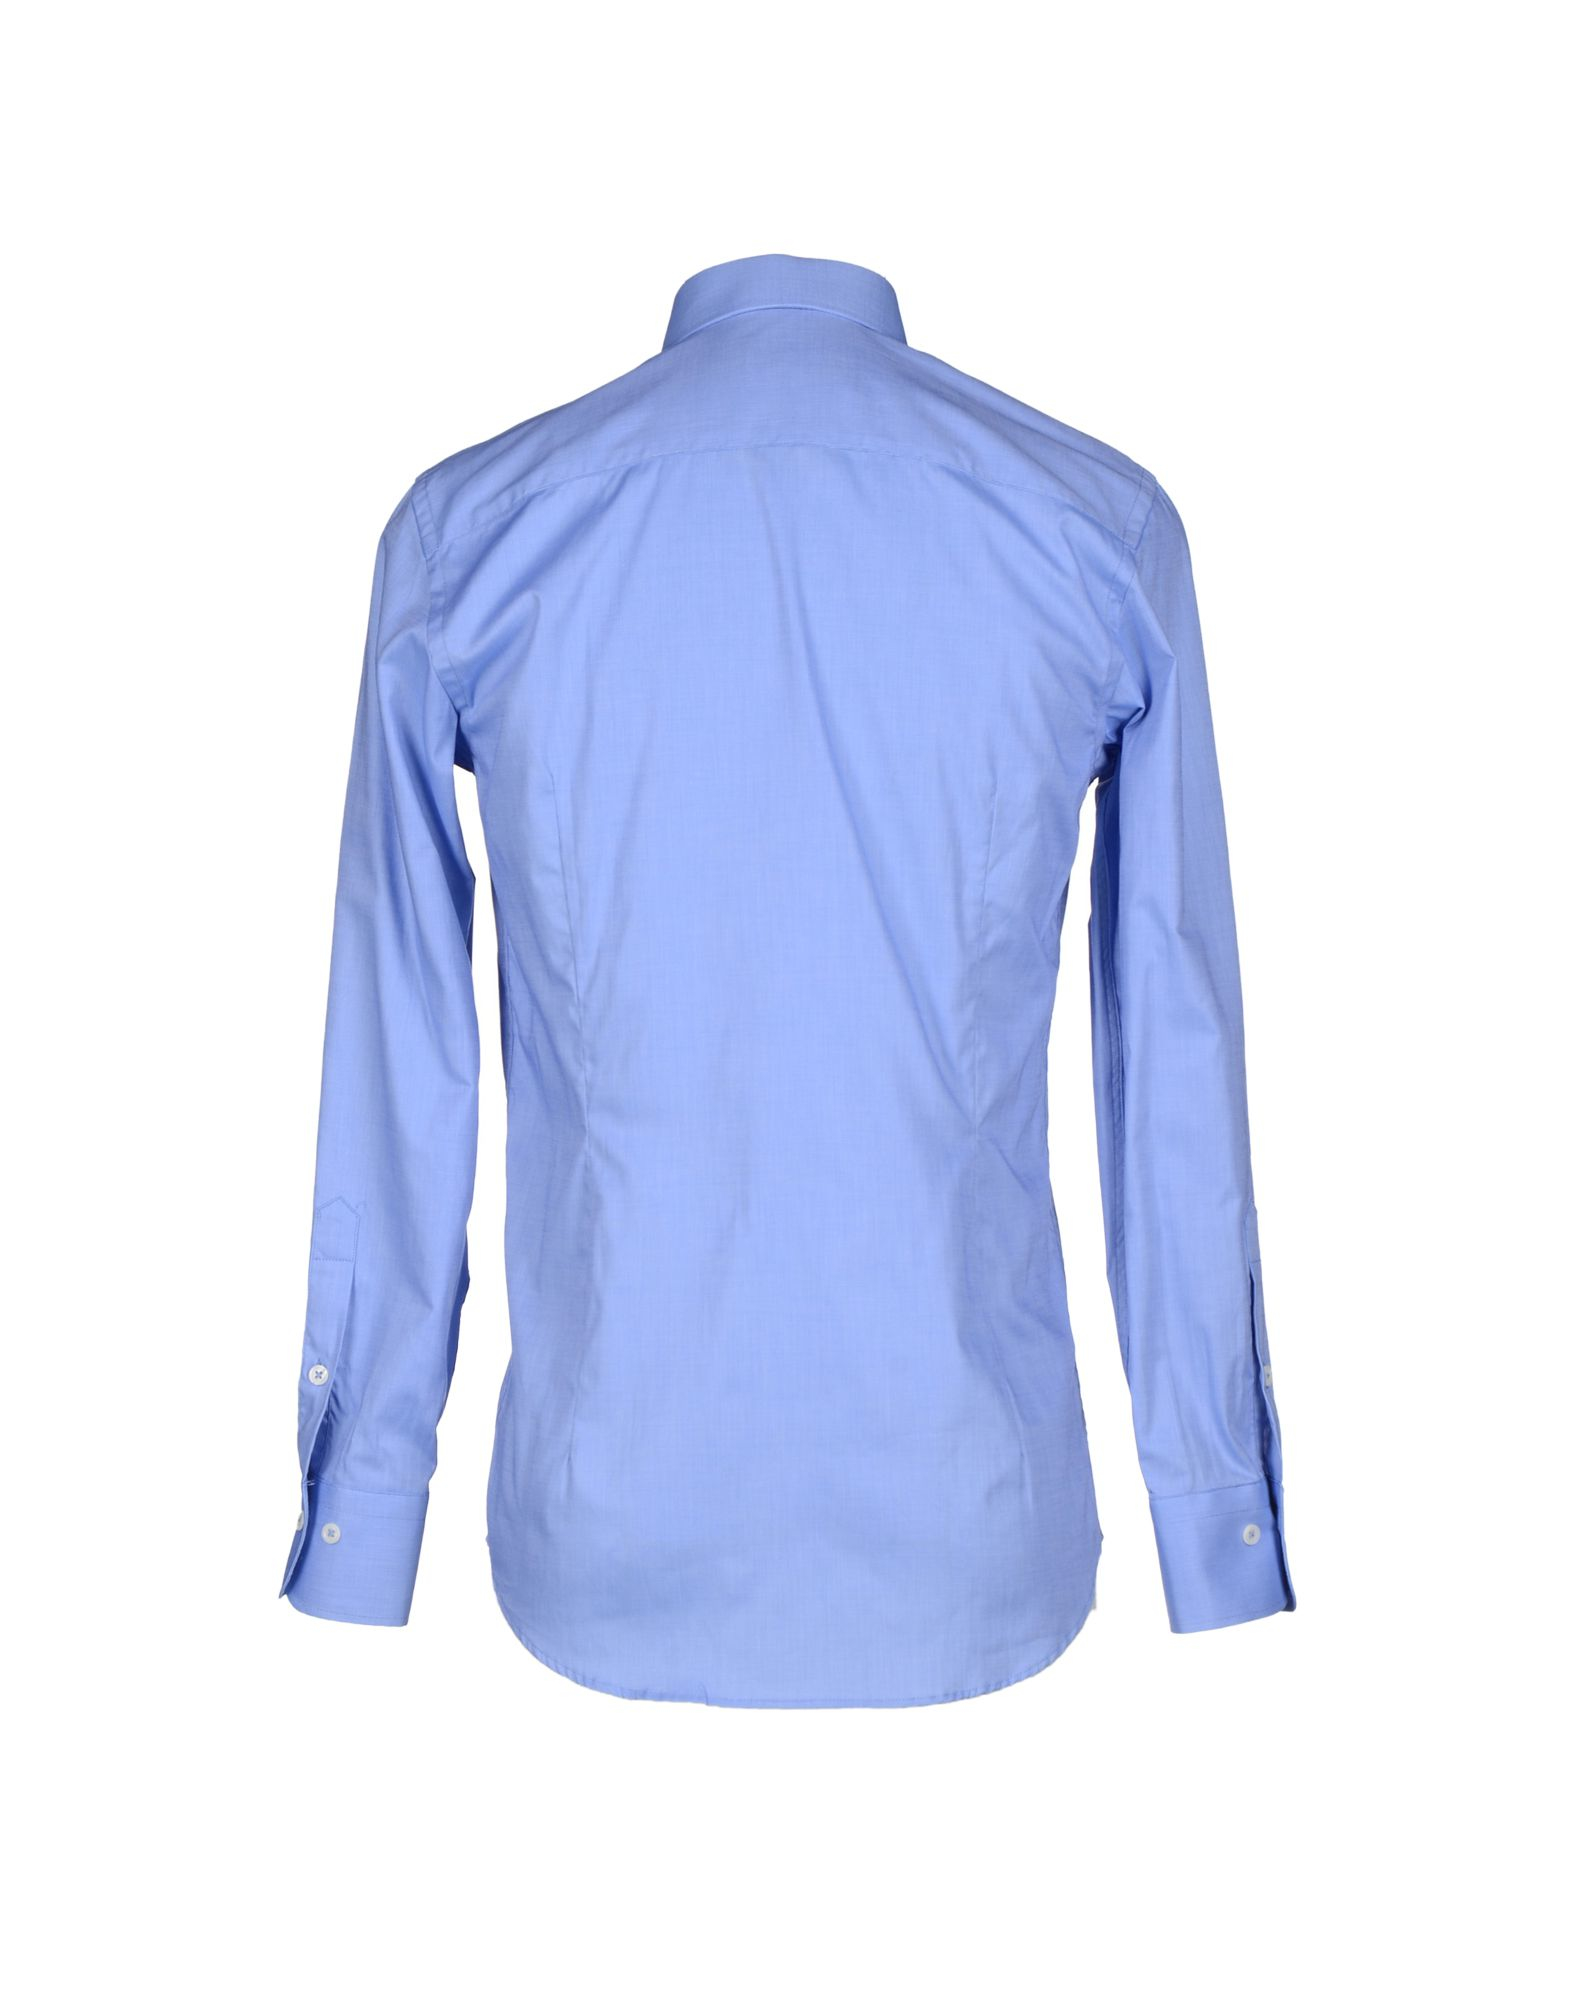 Lyst - Gianfranco Ferré Shirt in Blue for Men